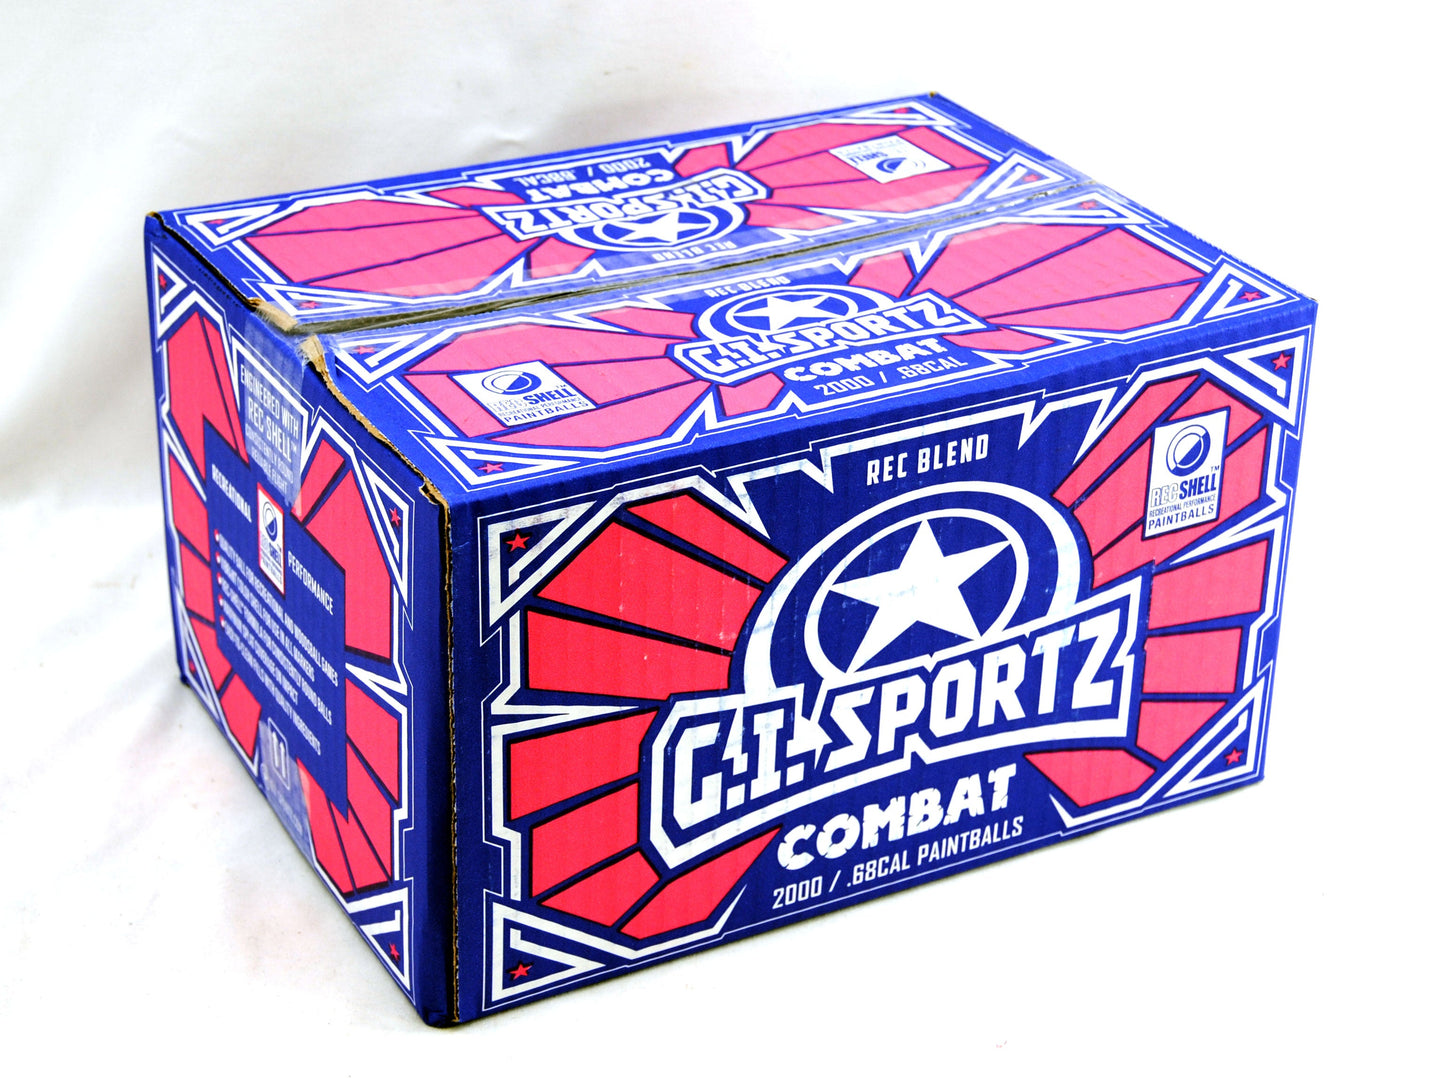 GI Sportz Combat Series Paintballs - 2000ct - NO SHIPPING